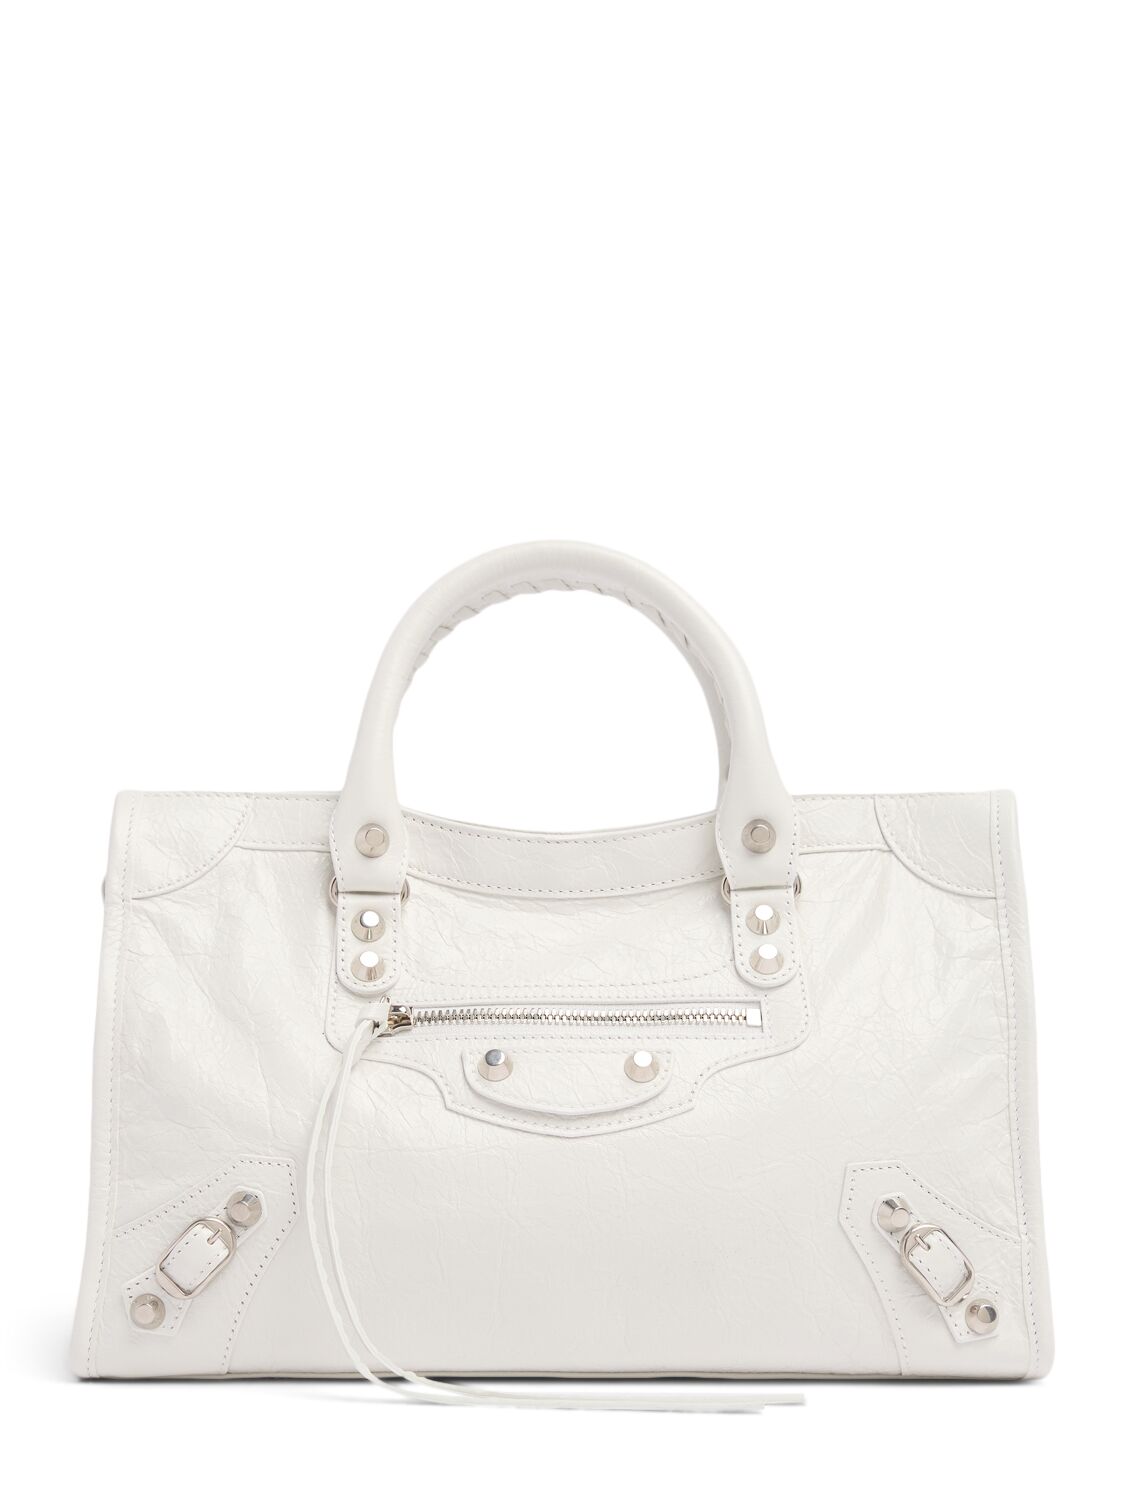 Balenciaga Small Le City Leather Shoulder Bag In Optic White